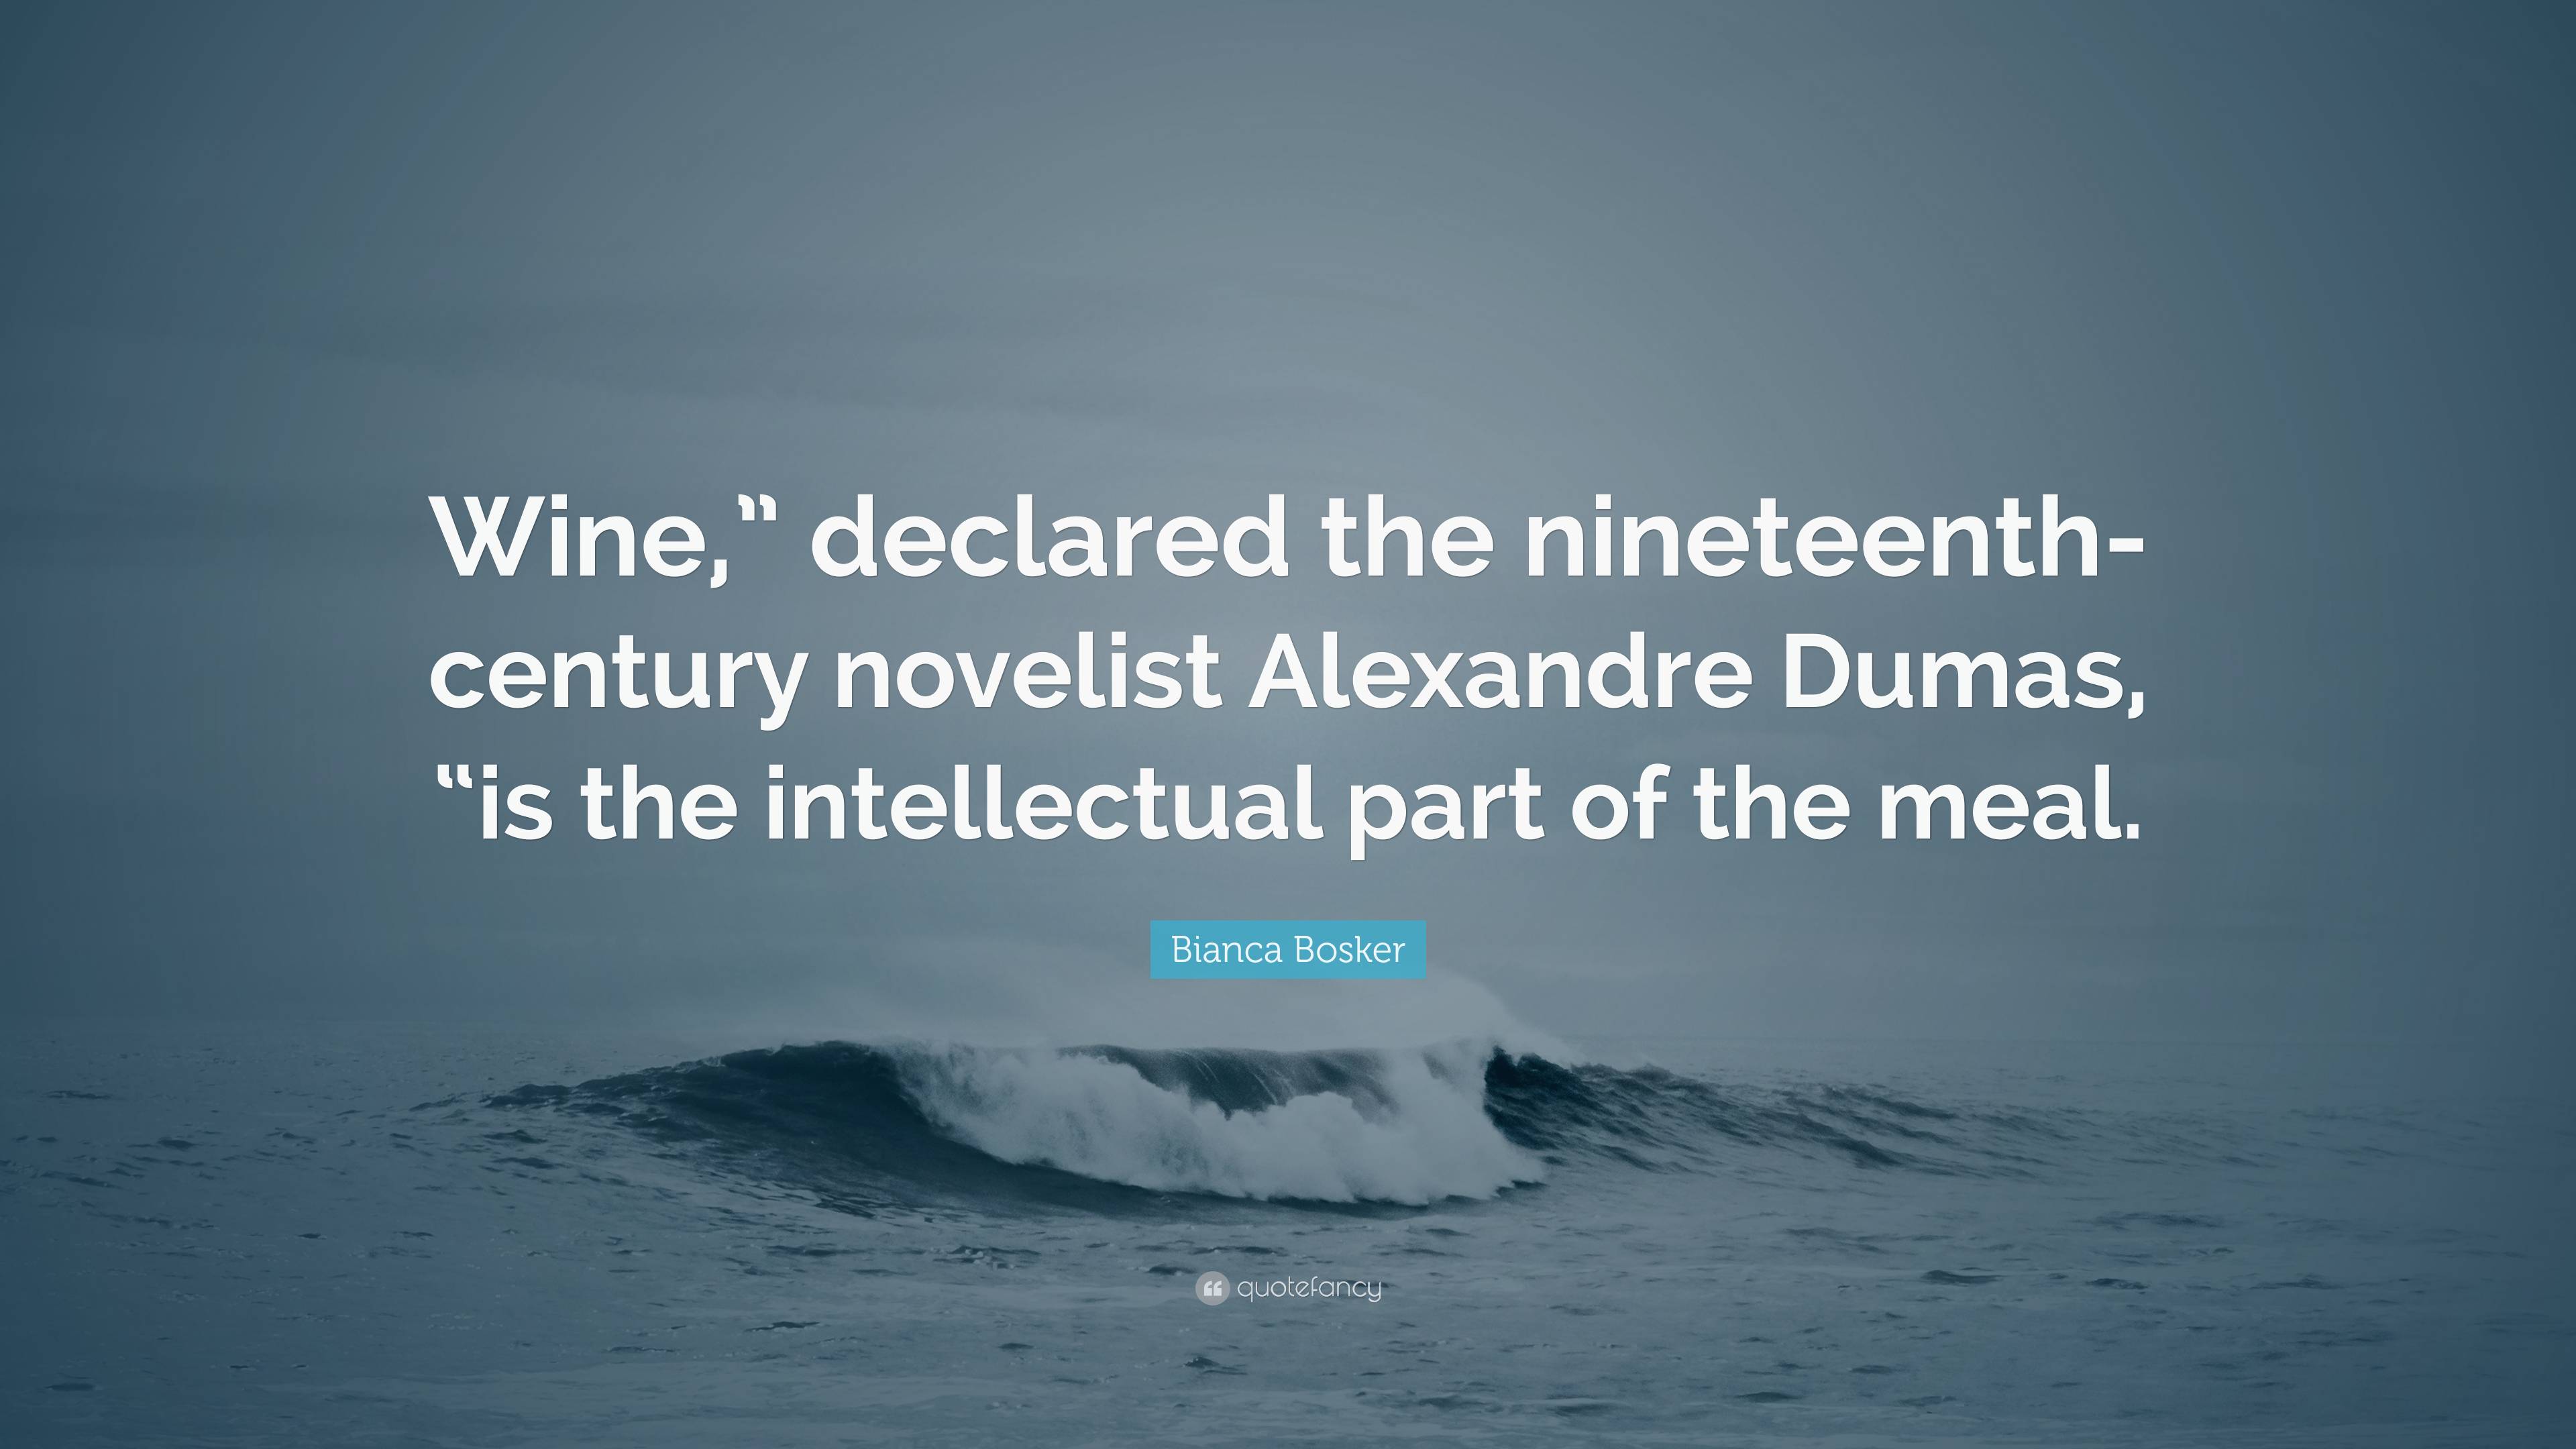 Bianca Bosker Quote: “Wine,” declared the nineteenth-century novelist ...